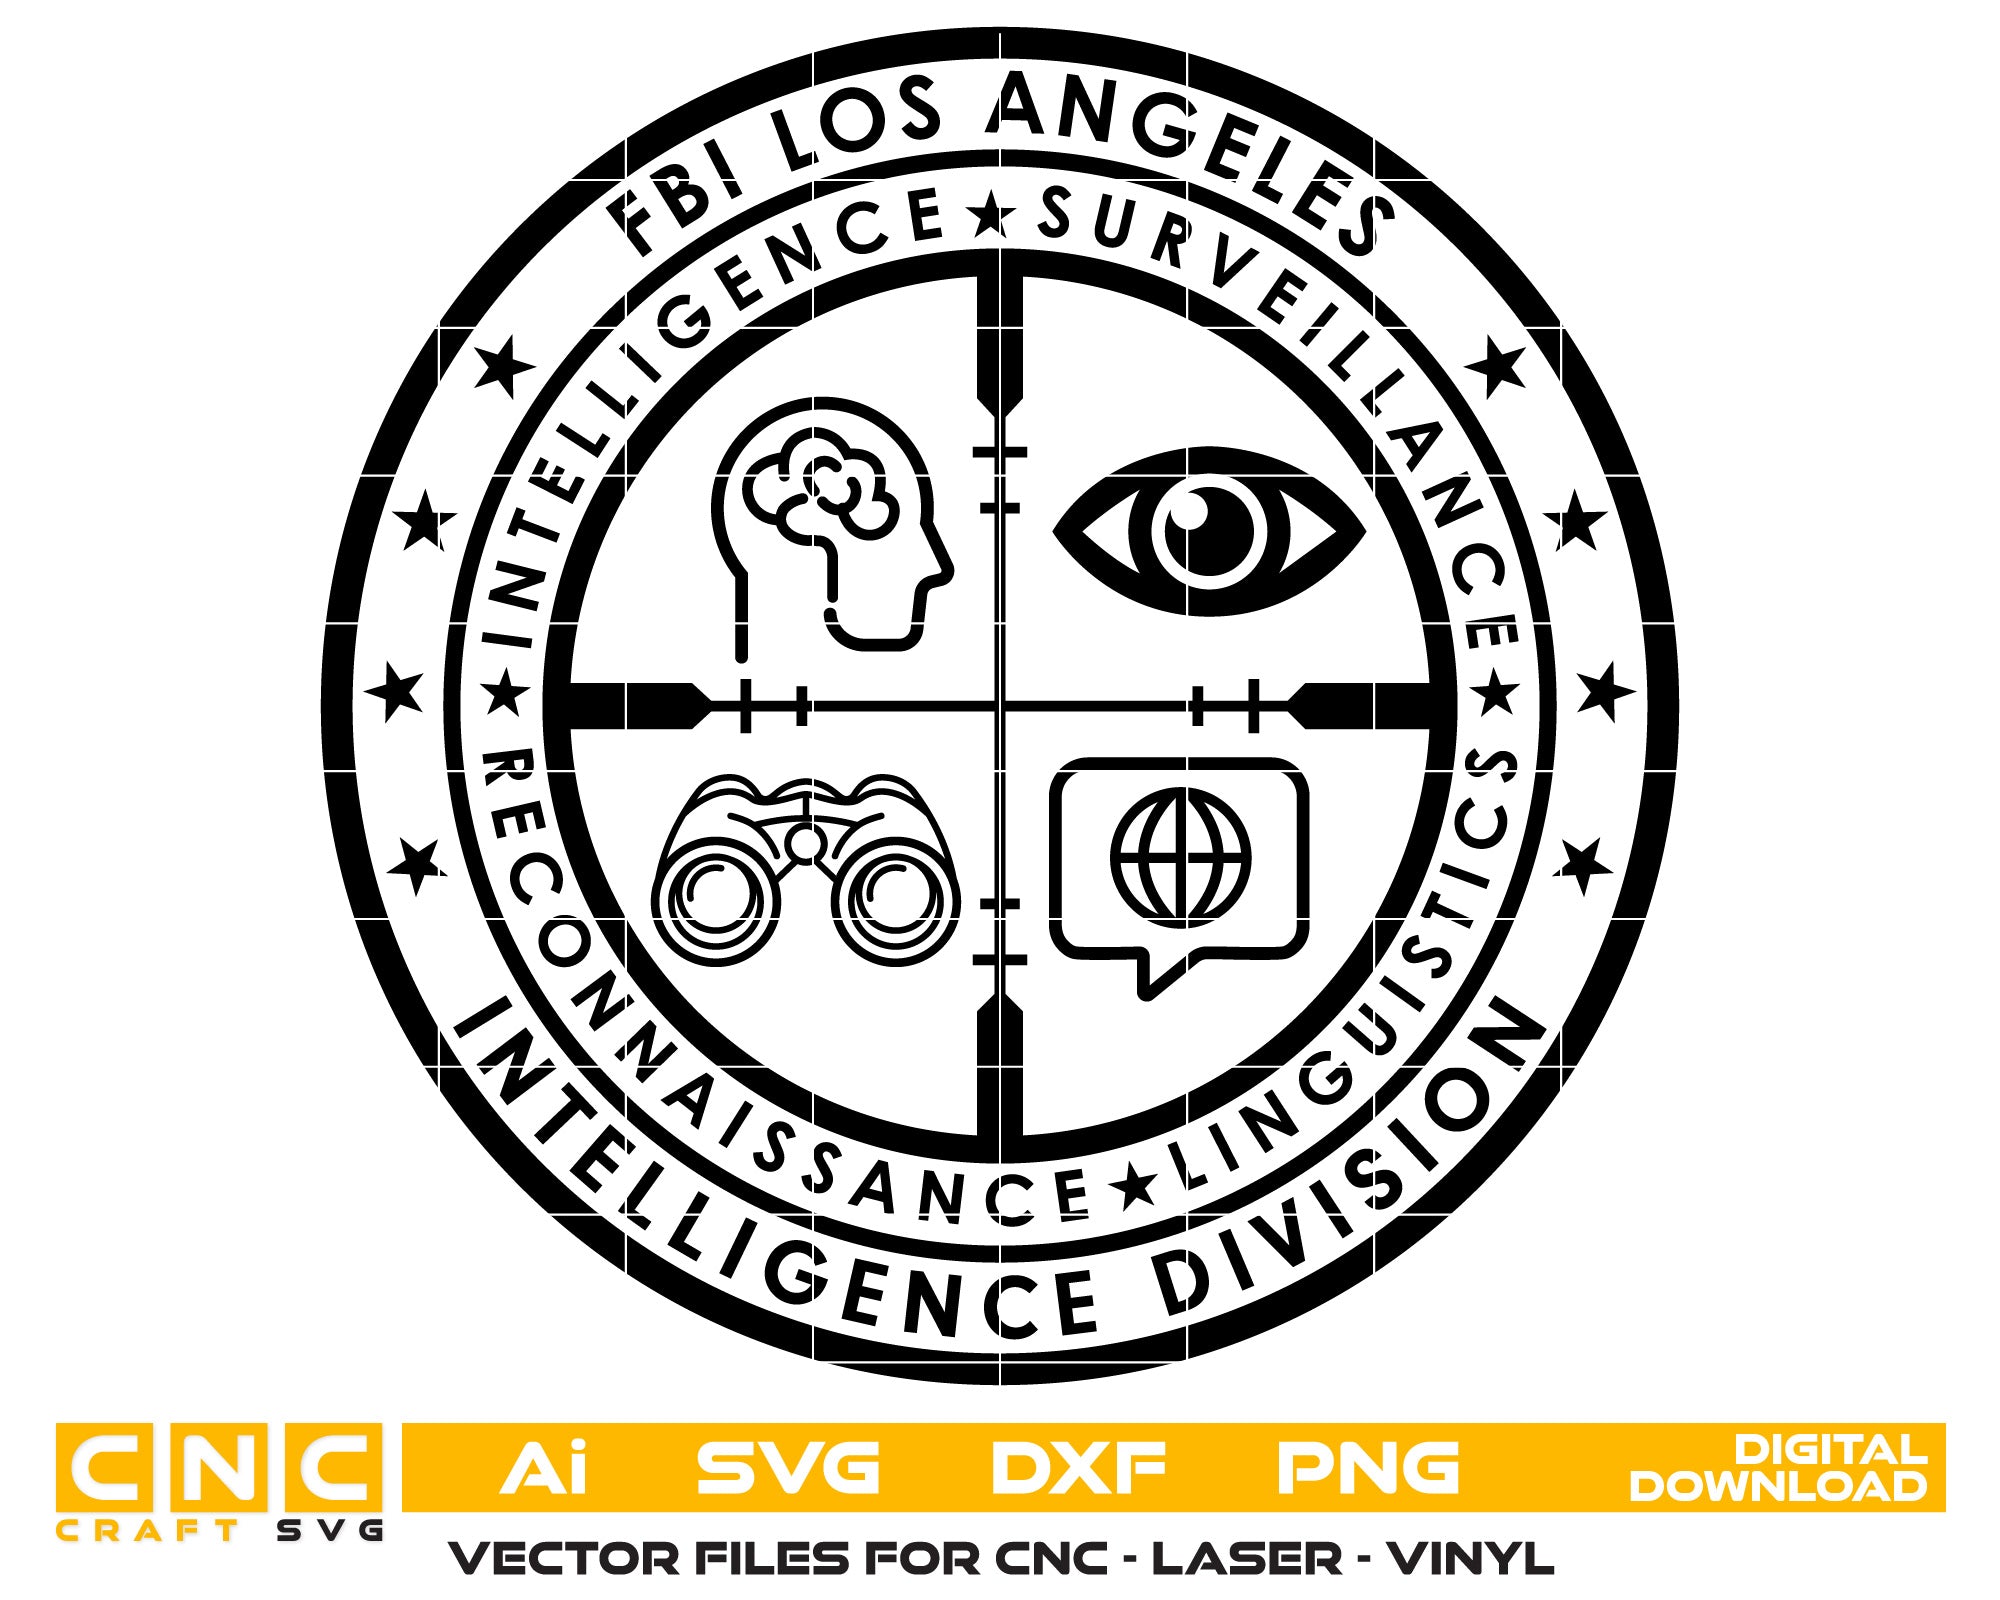 Fbi Los Angeles Intelligence Division Logo Vector Art, Ai,SVG, DXF, PNG, Digital Files